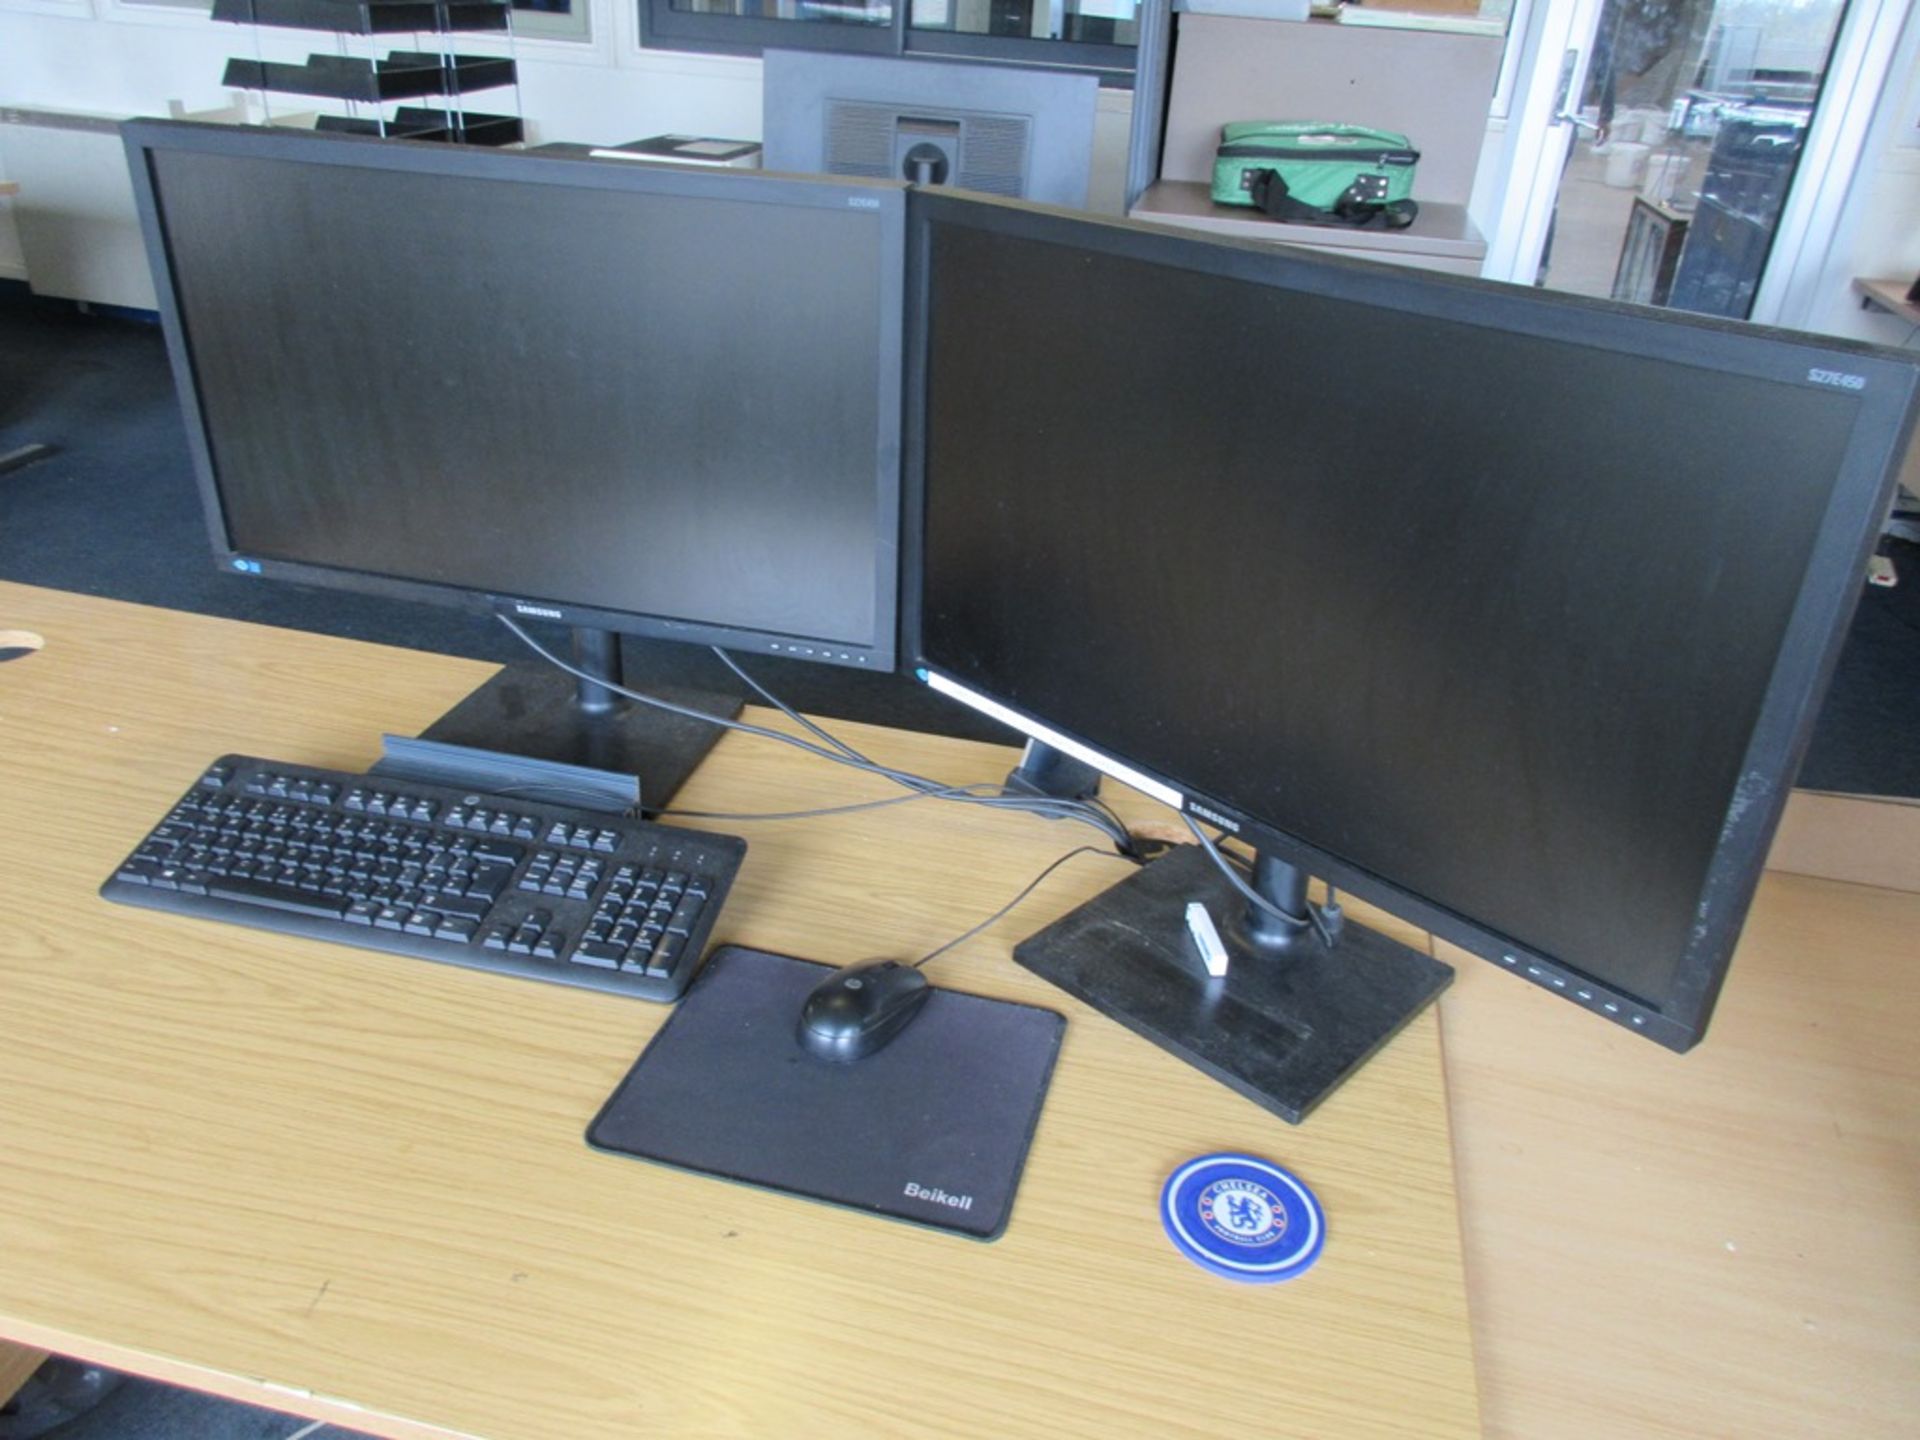 HP Core i3 computer system, 2 x flat screen monitor, keyboard, mouse, HP Laserjet P3015 printer